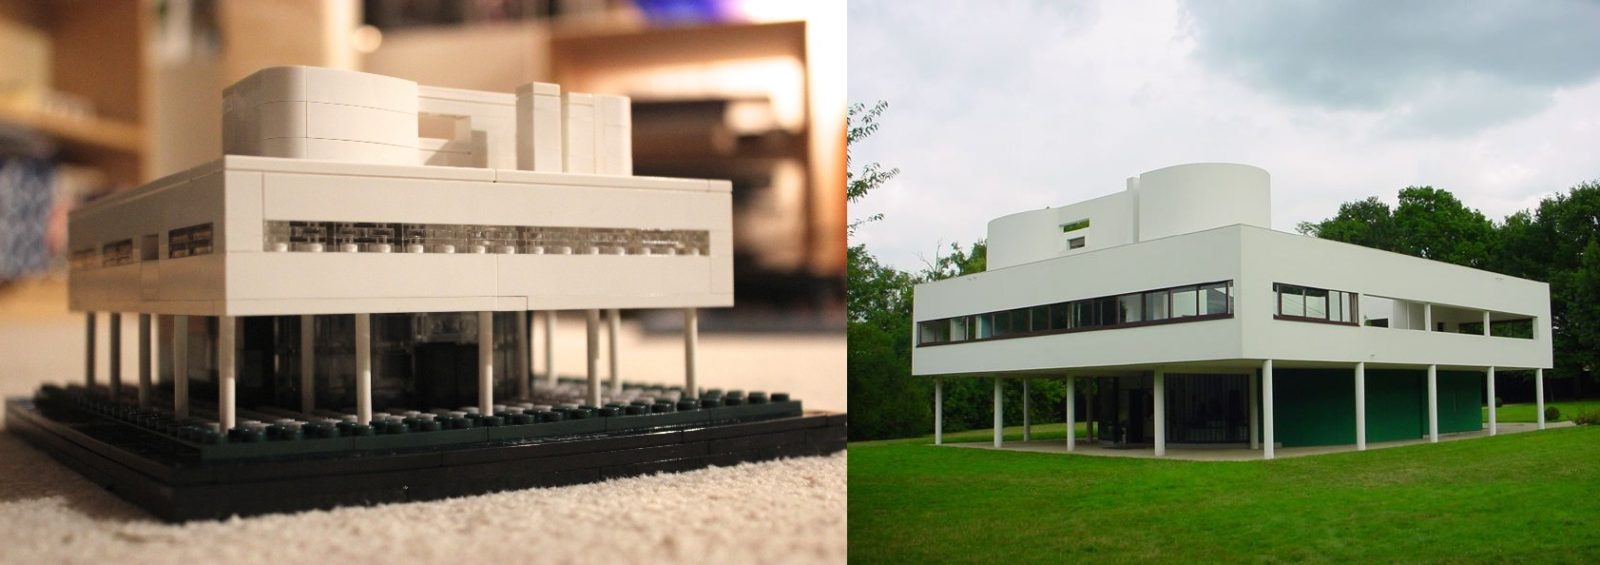 Top 5 LEGO Architecture sets (under 50$) - Tom Alphin